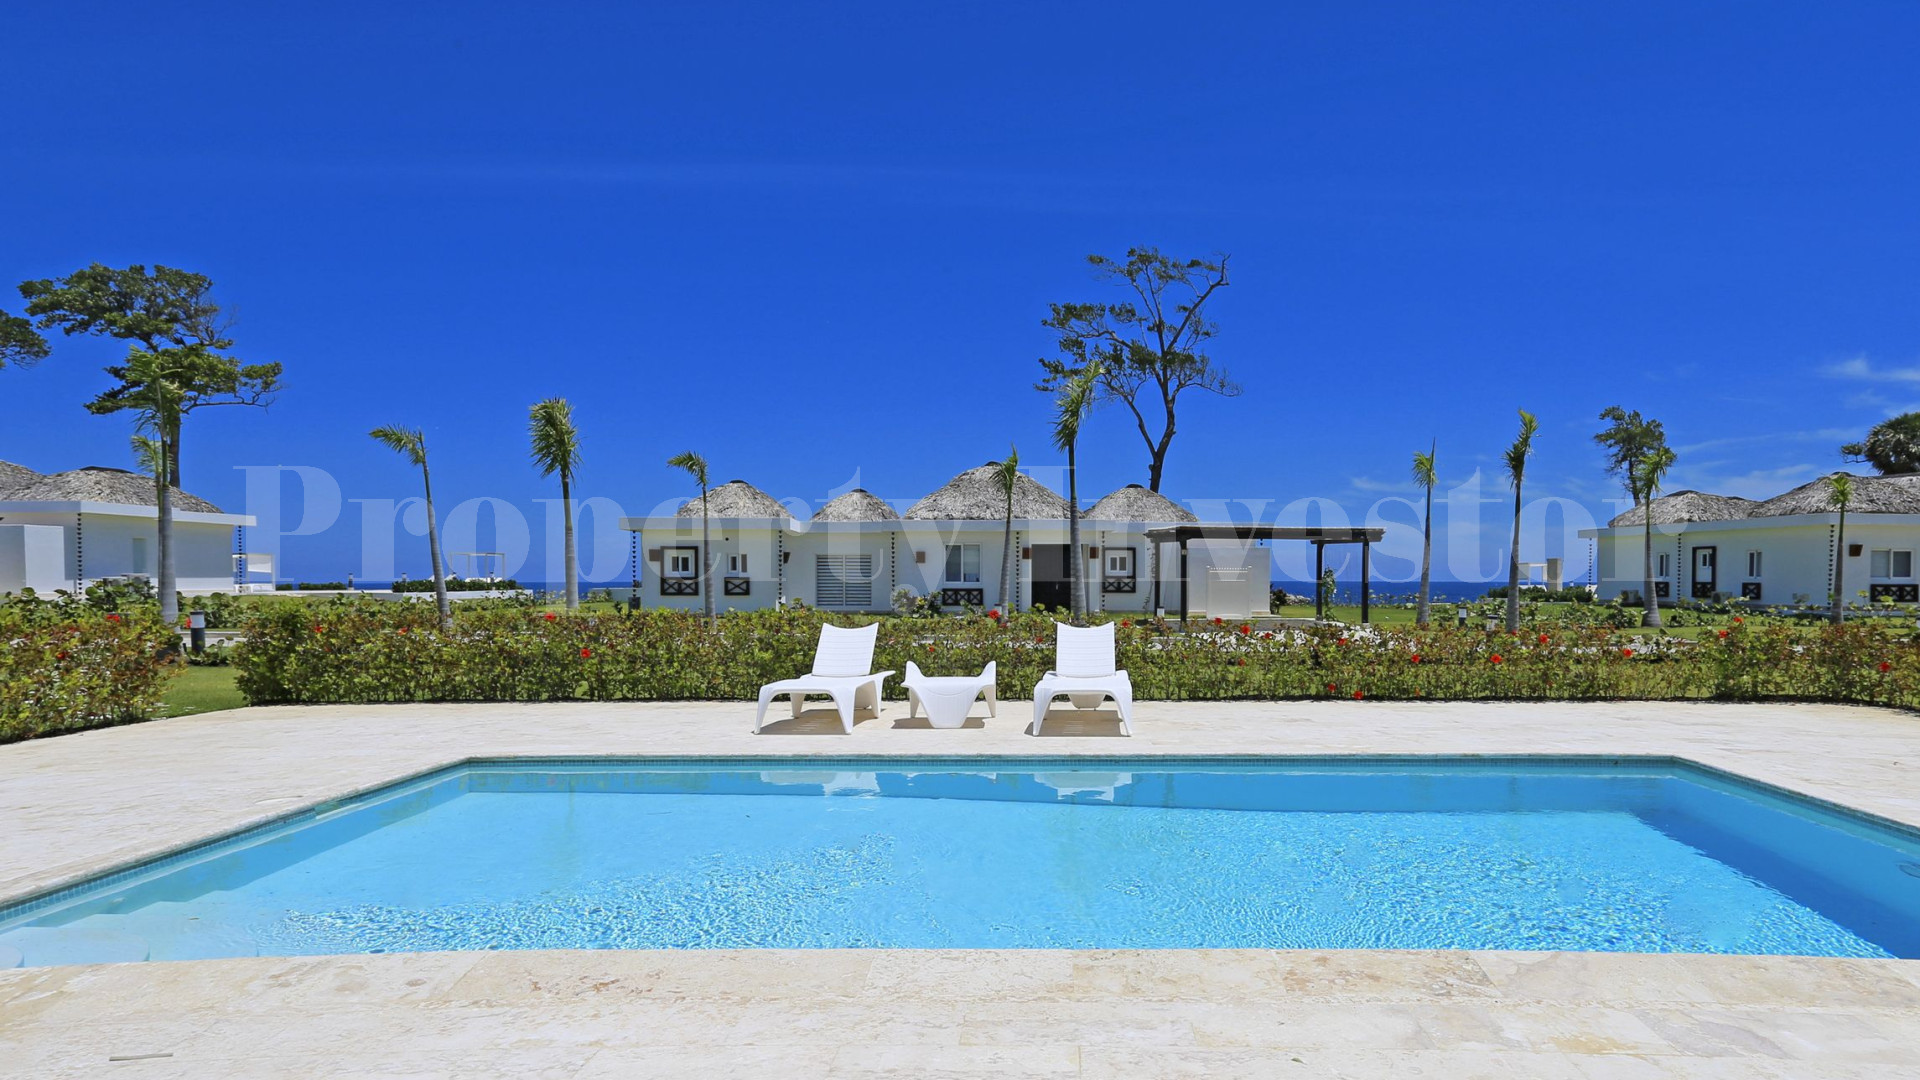 2 Bedroom Oceanview Villa in the Dominican Republic with 30 Year Financing (Villa 18)